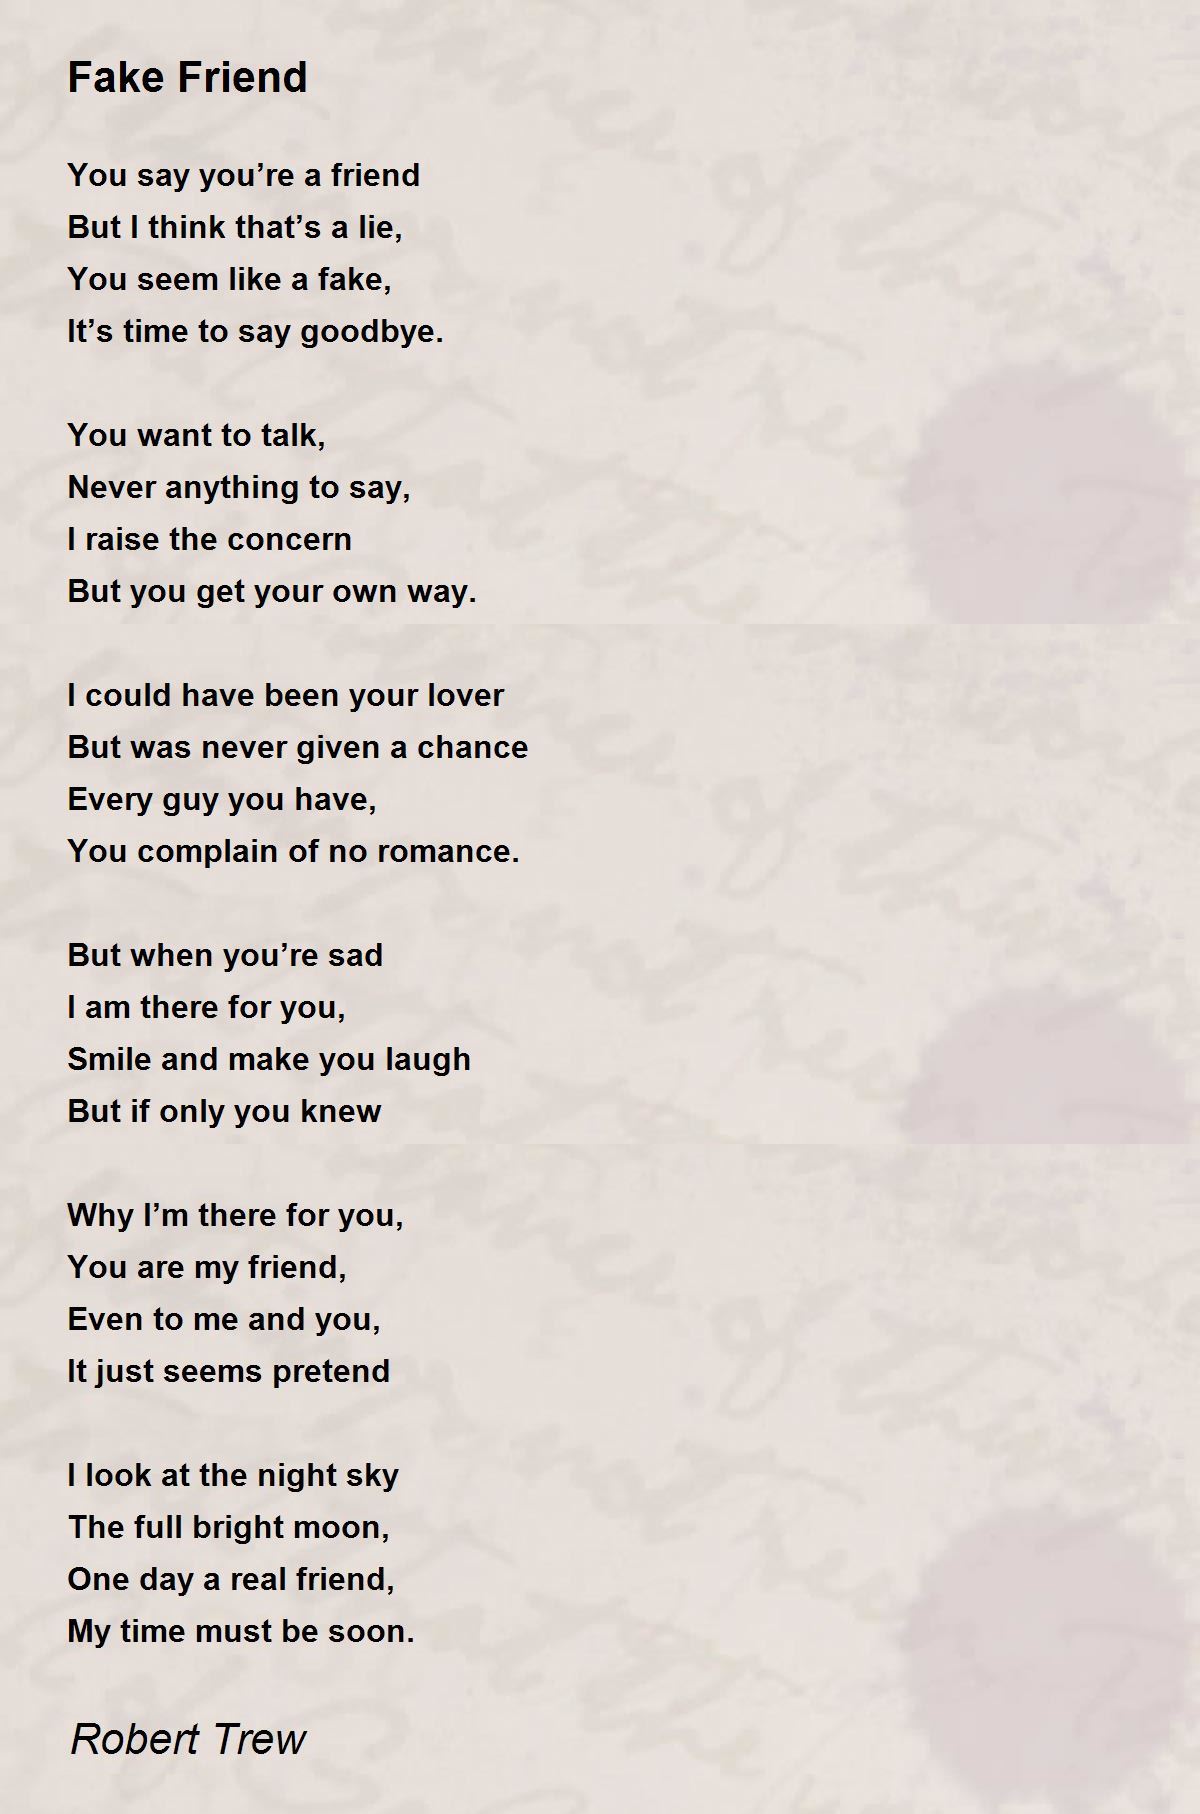 Fake Friend - Fake Friend Poem by Robert Trew